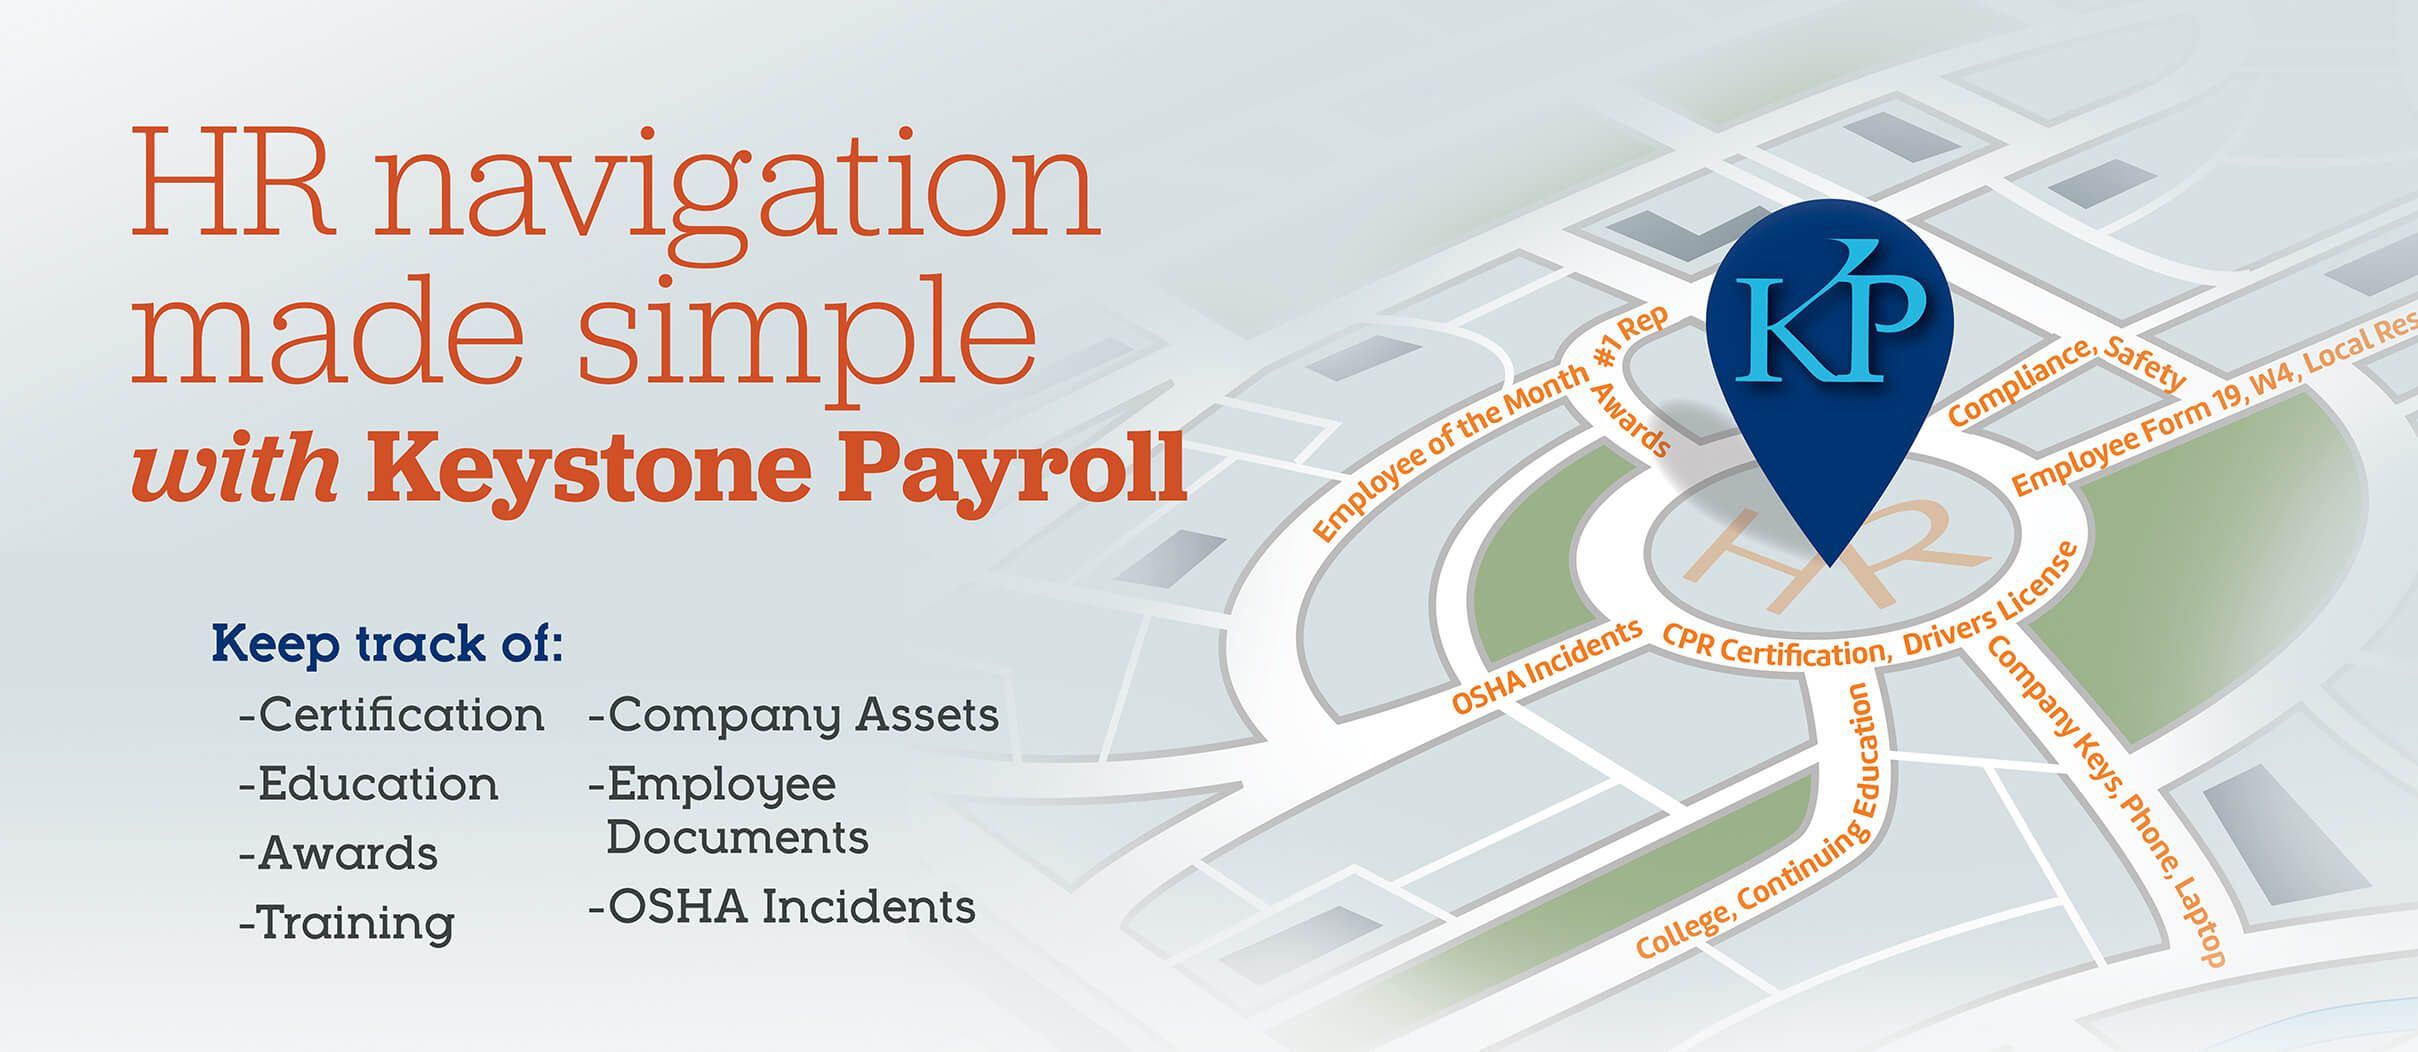 Human Capital Management with Keystone Payroll